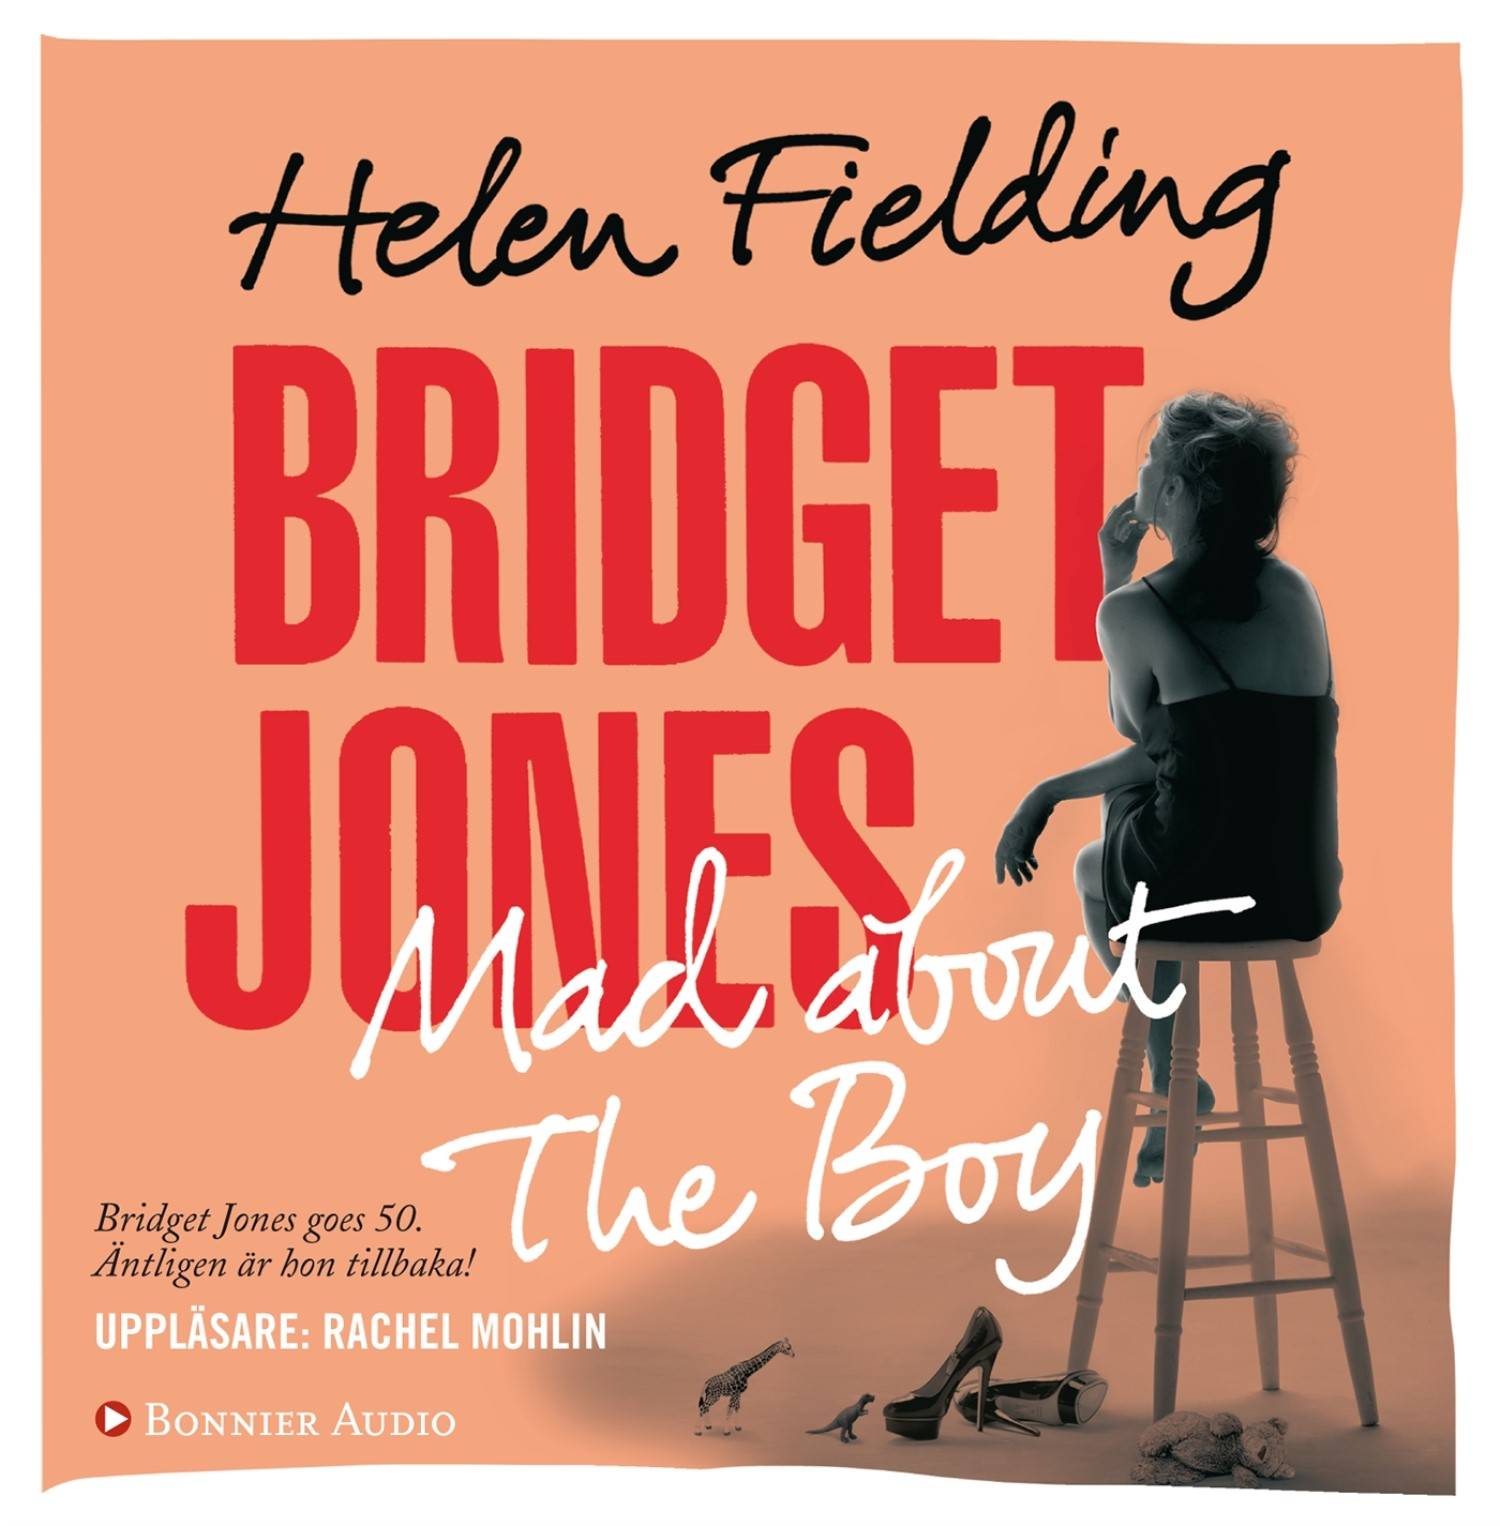 Bridget Jones : mad about the boy